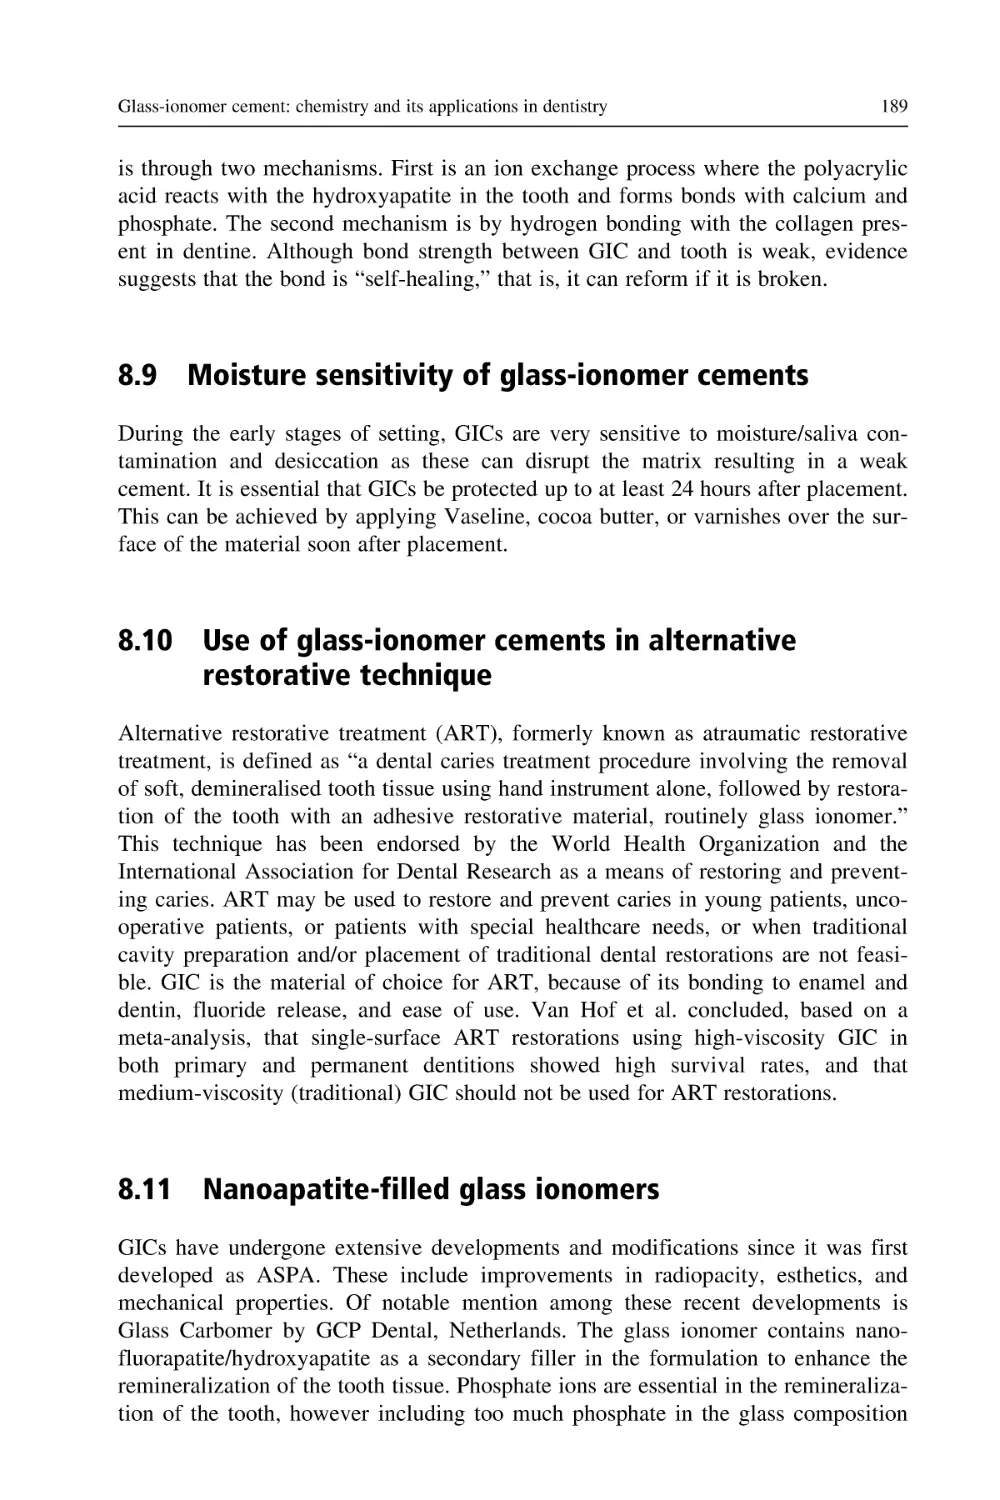 8.9 Moisture sensitivity of glass-ionomer cements
8.10 Use of glass-ionomer cements in alternative restorative technique
8.11 Nanoapatite-filled glass ionomers